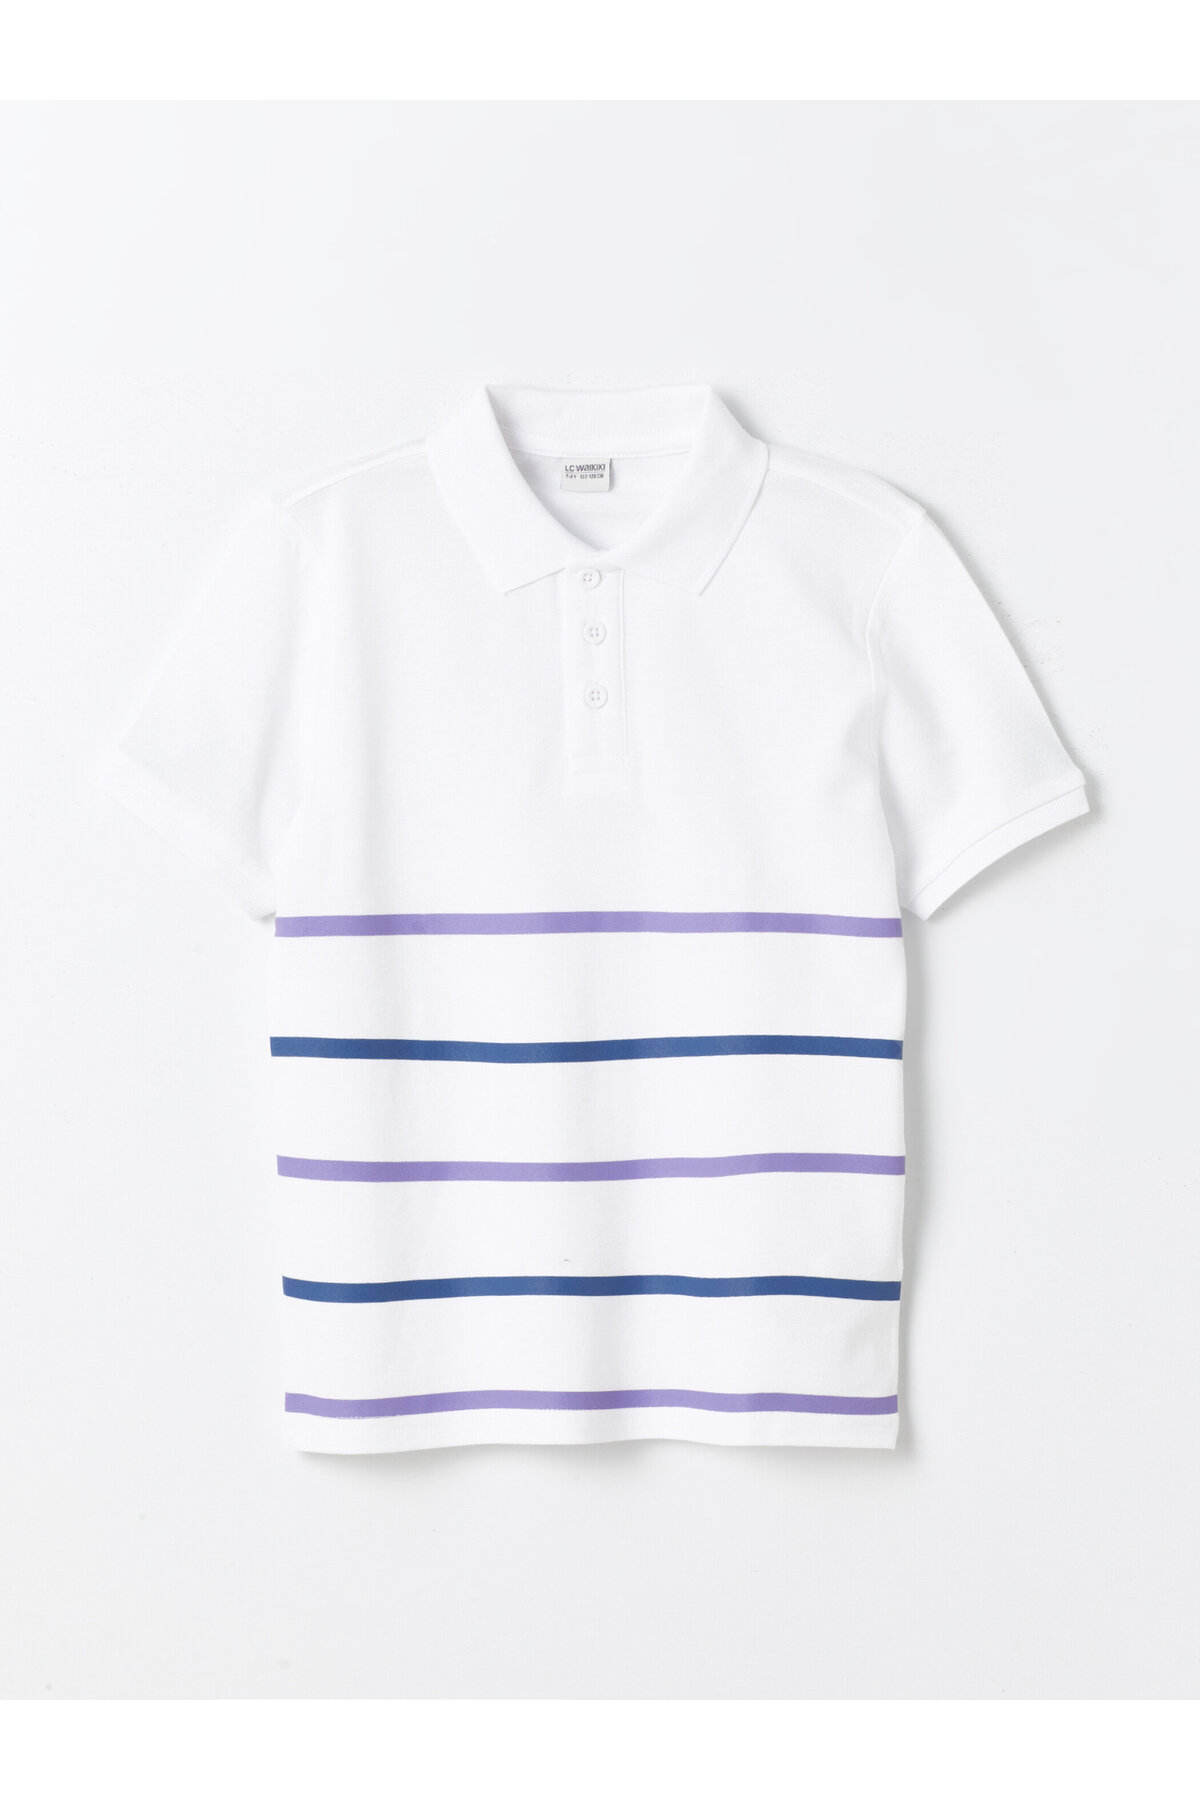 LC Waikiki Striped Polo Neck Short Sleeve Boys T-Shirt